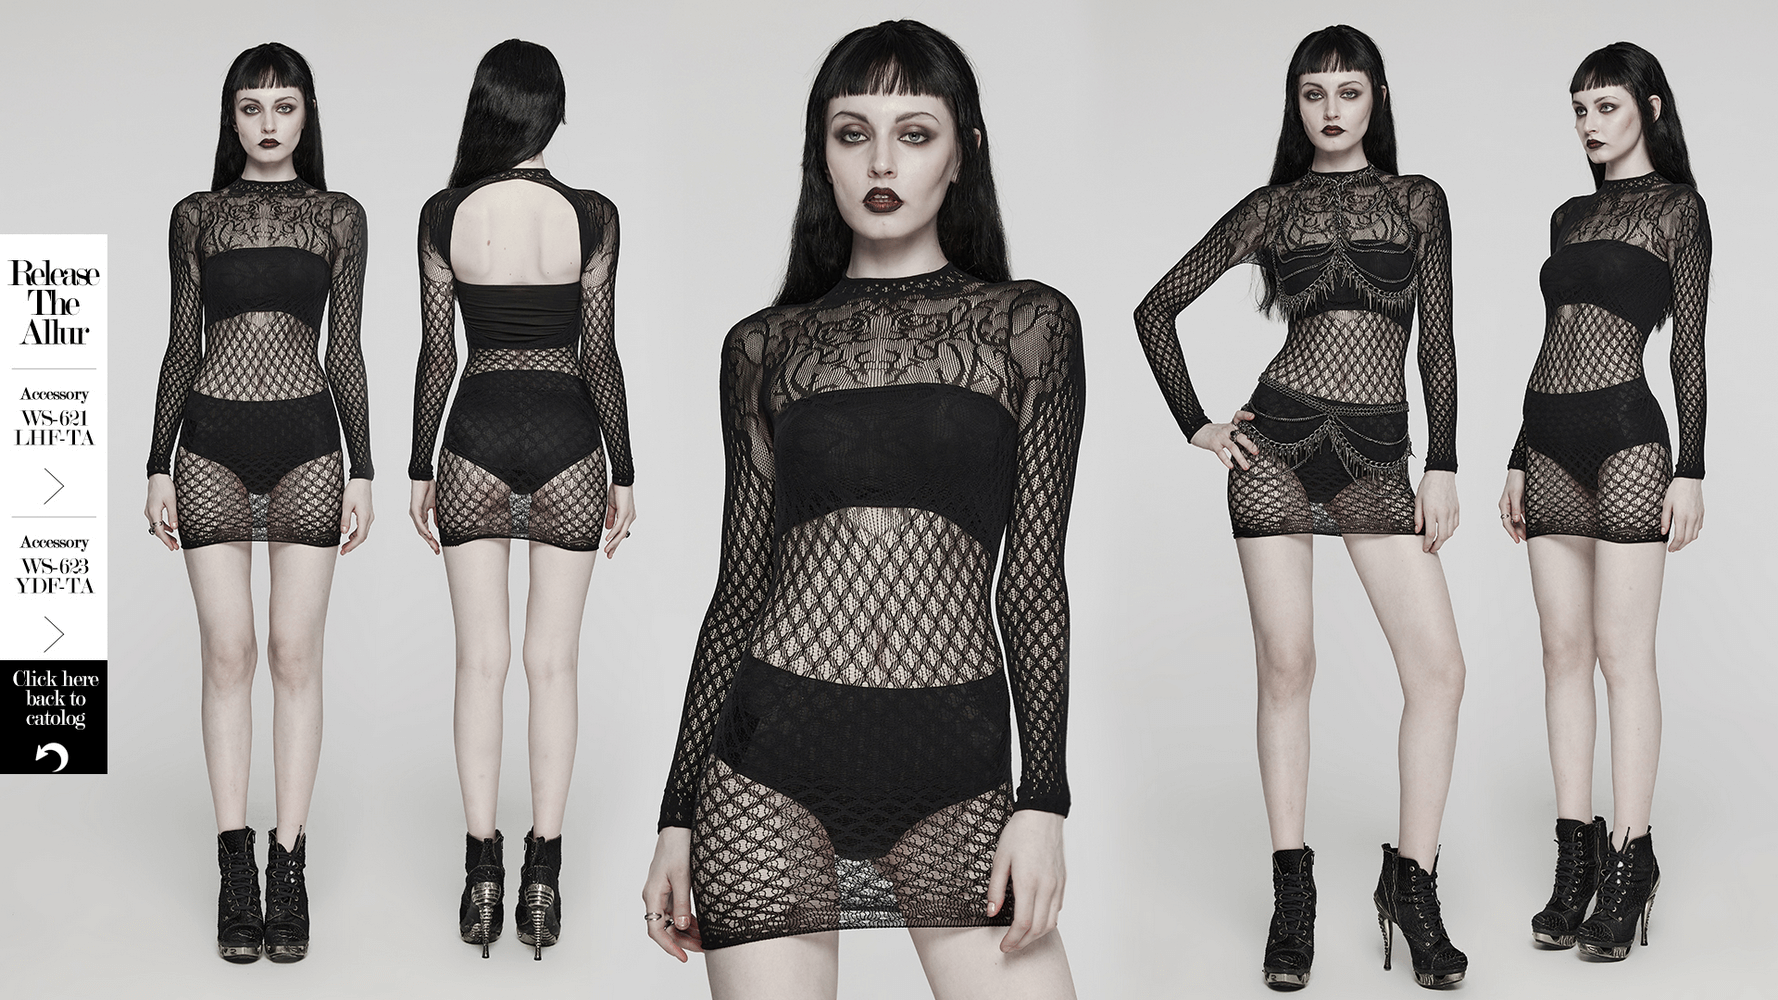 Gothic Black Mesh Dress with Vine Lace Details